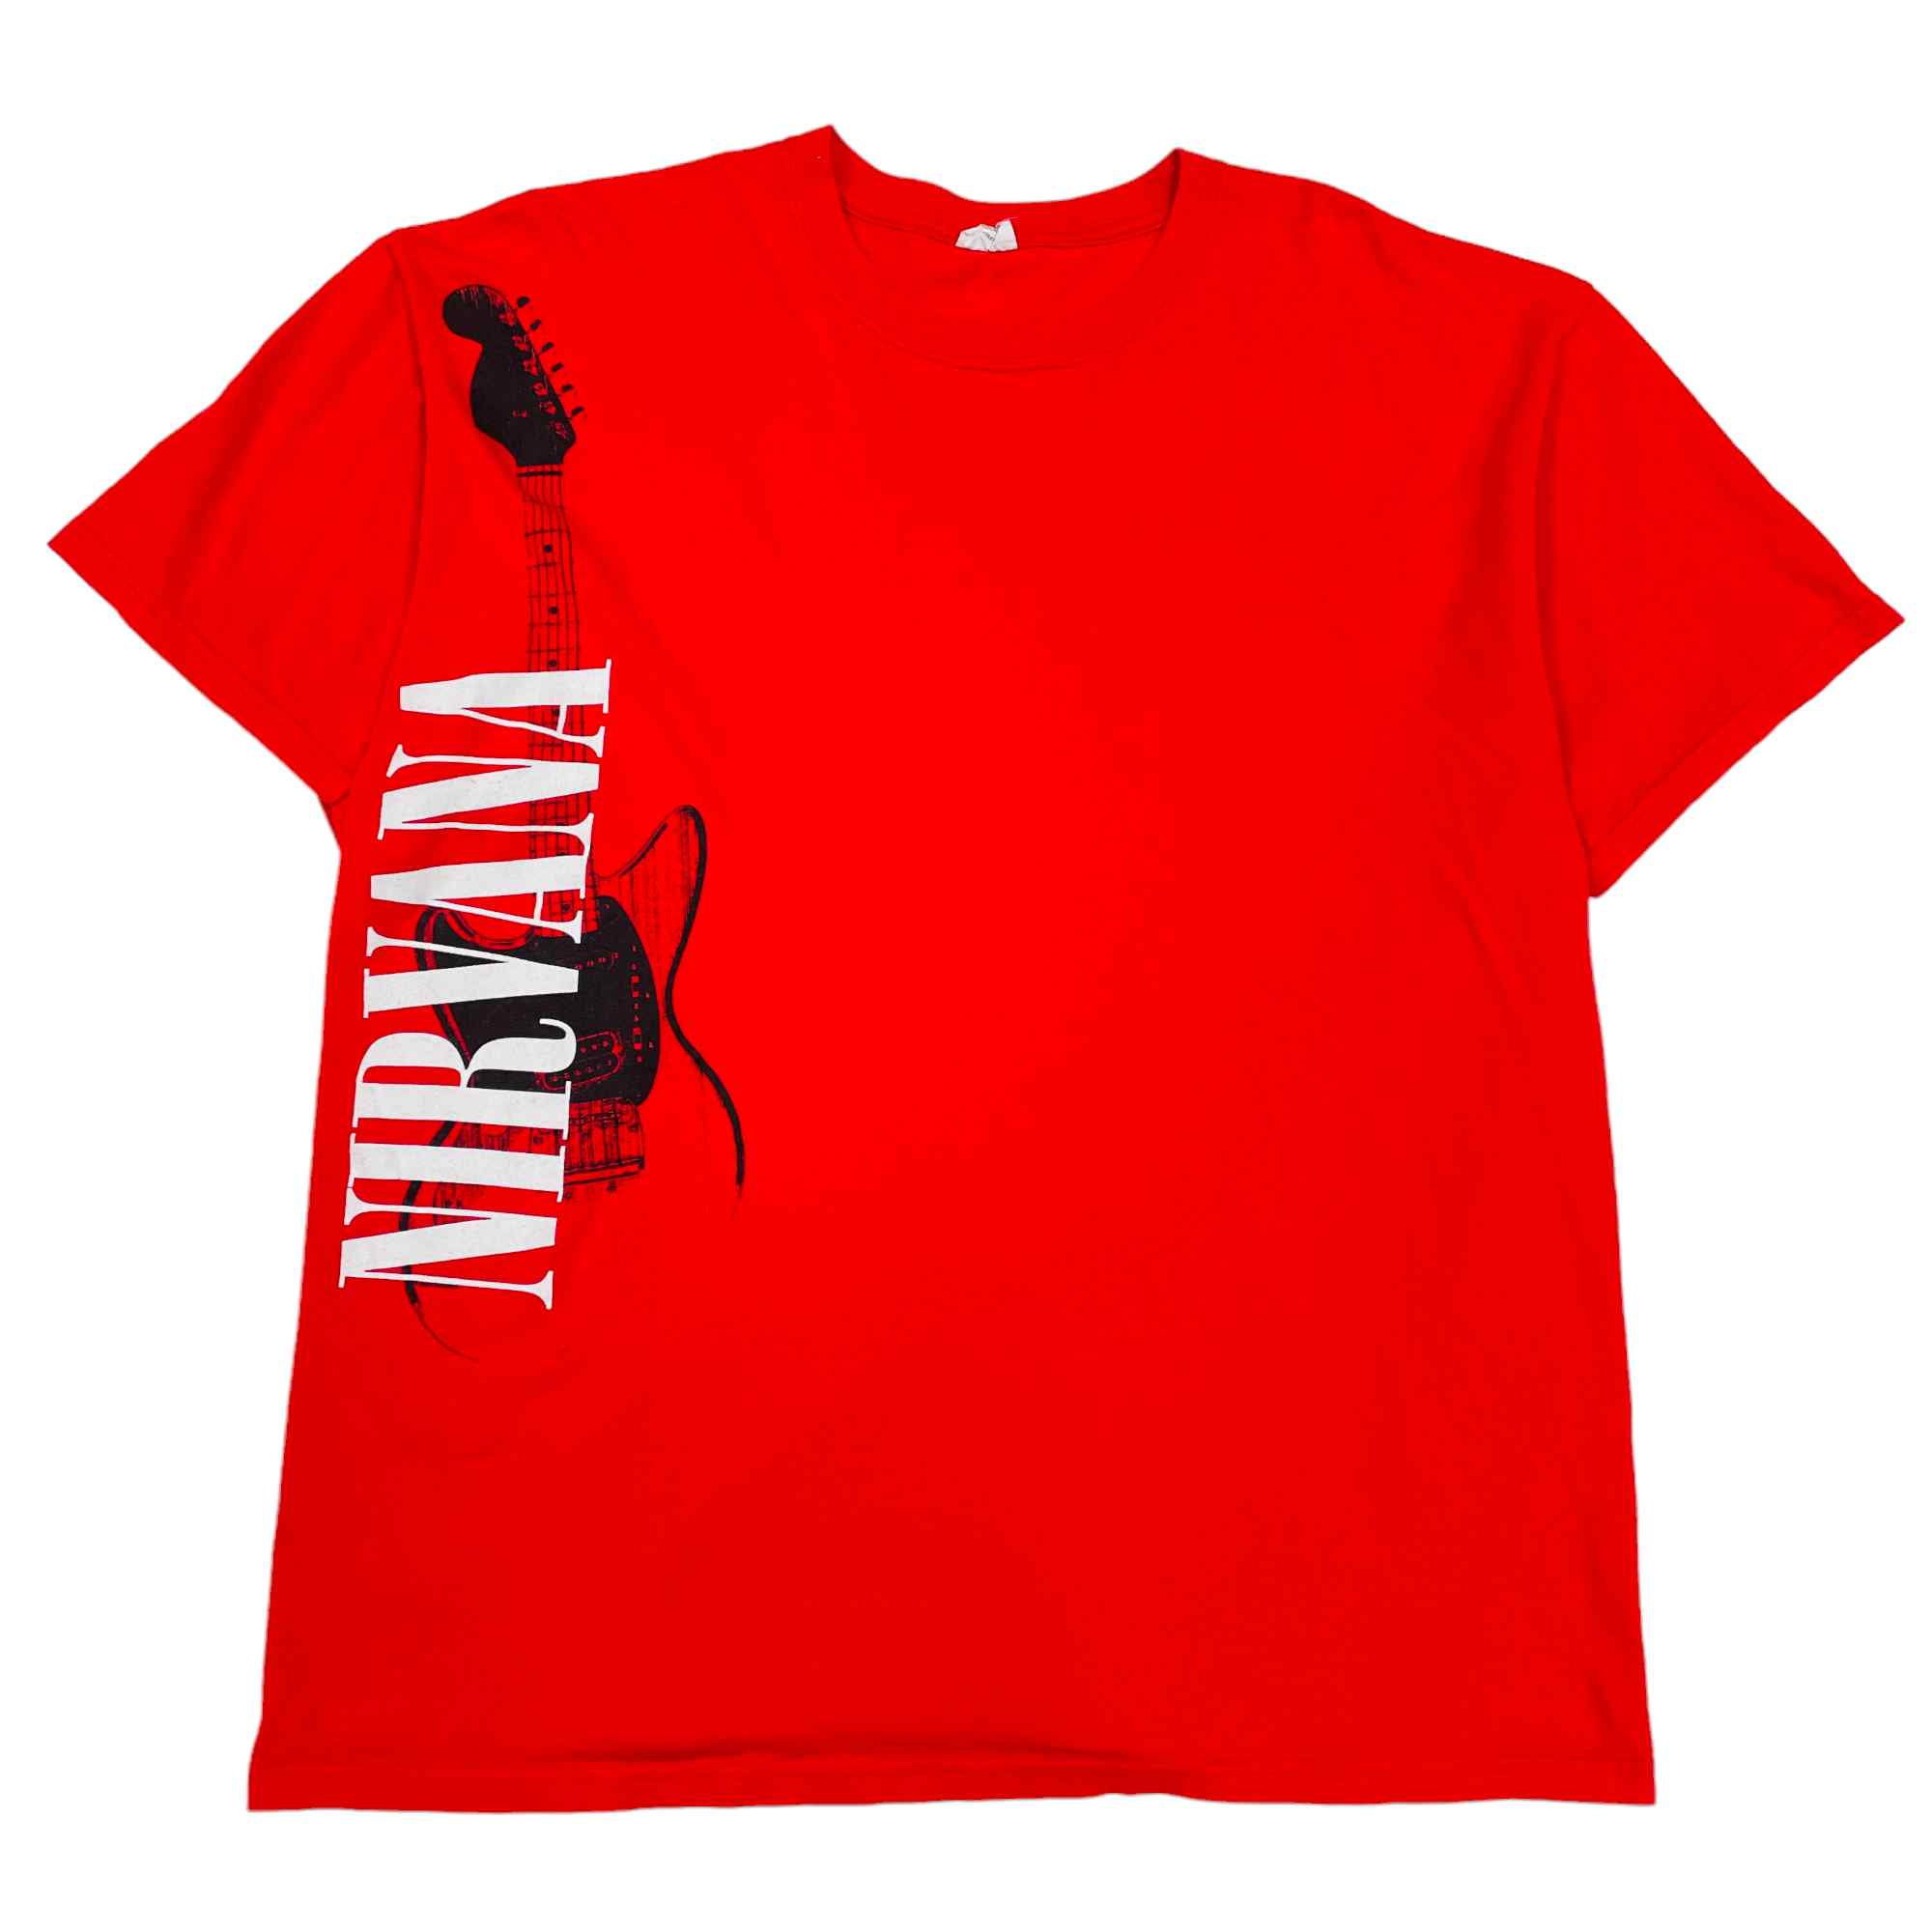 Nirvana Graphic T-Shirt - Large